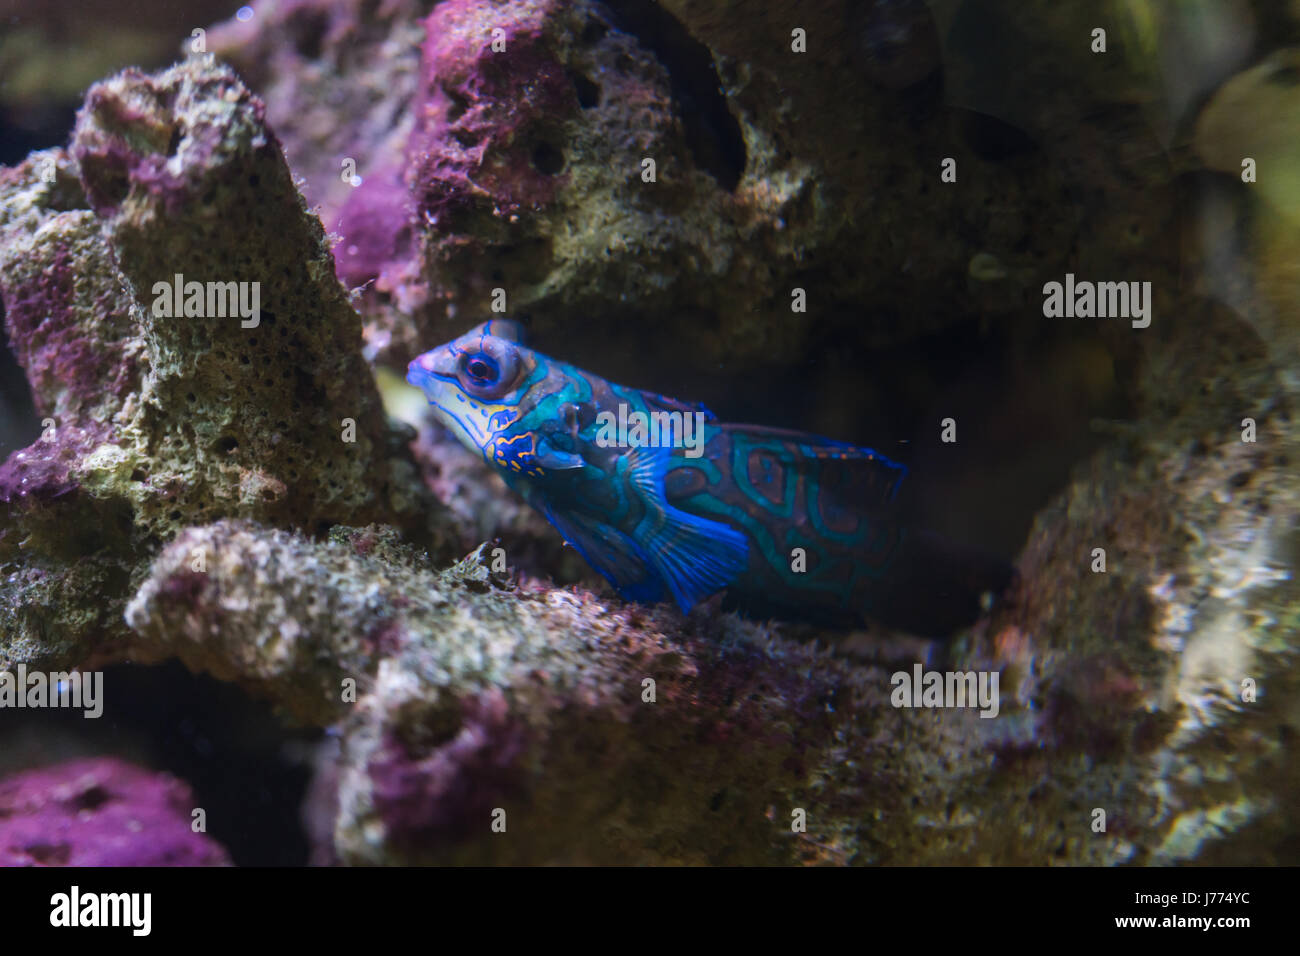 Mandarinfish in marine aquarium Stock Photo